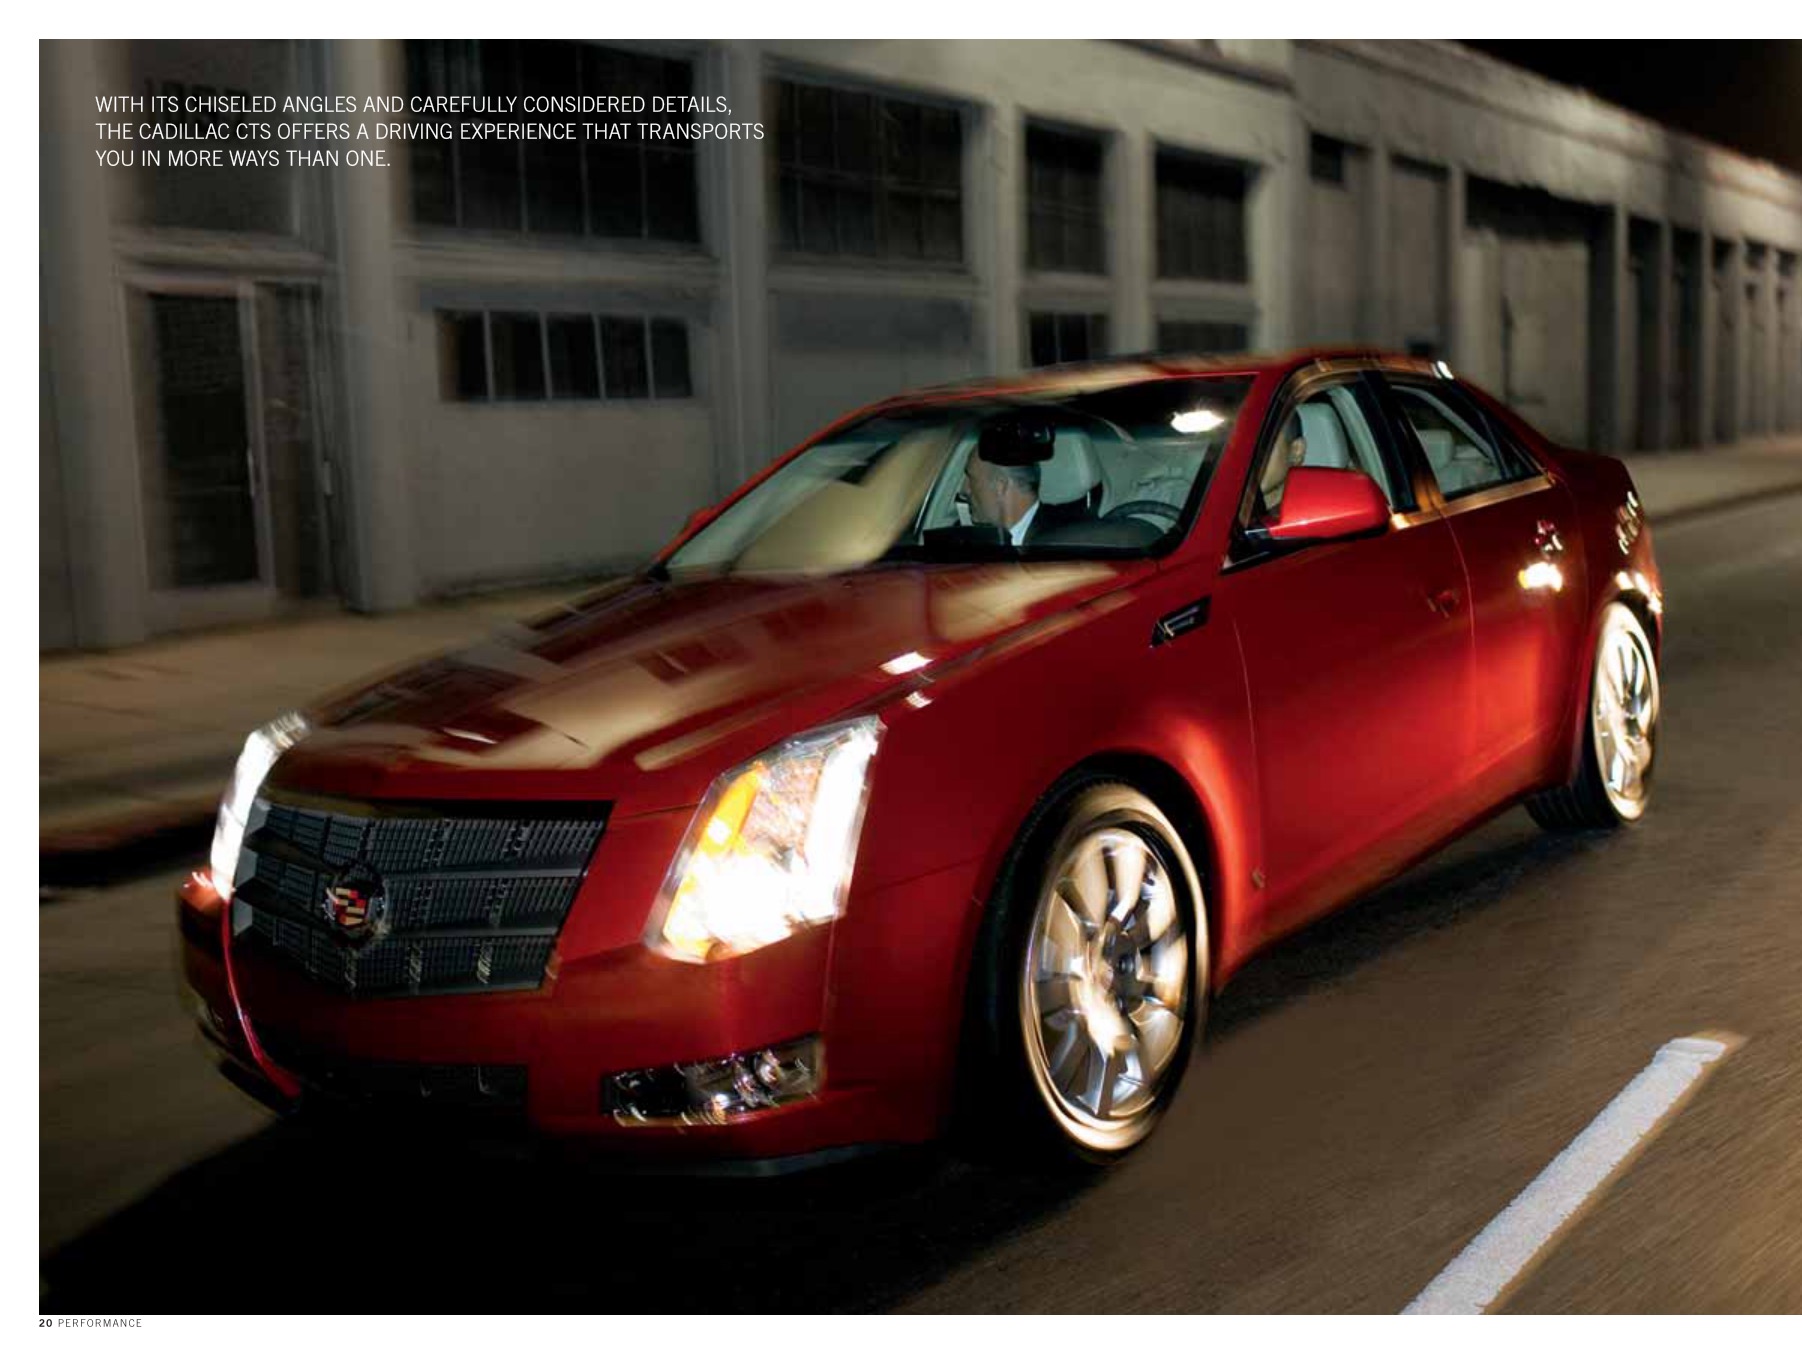 2009 Cadillac CTS Brochure Page 19